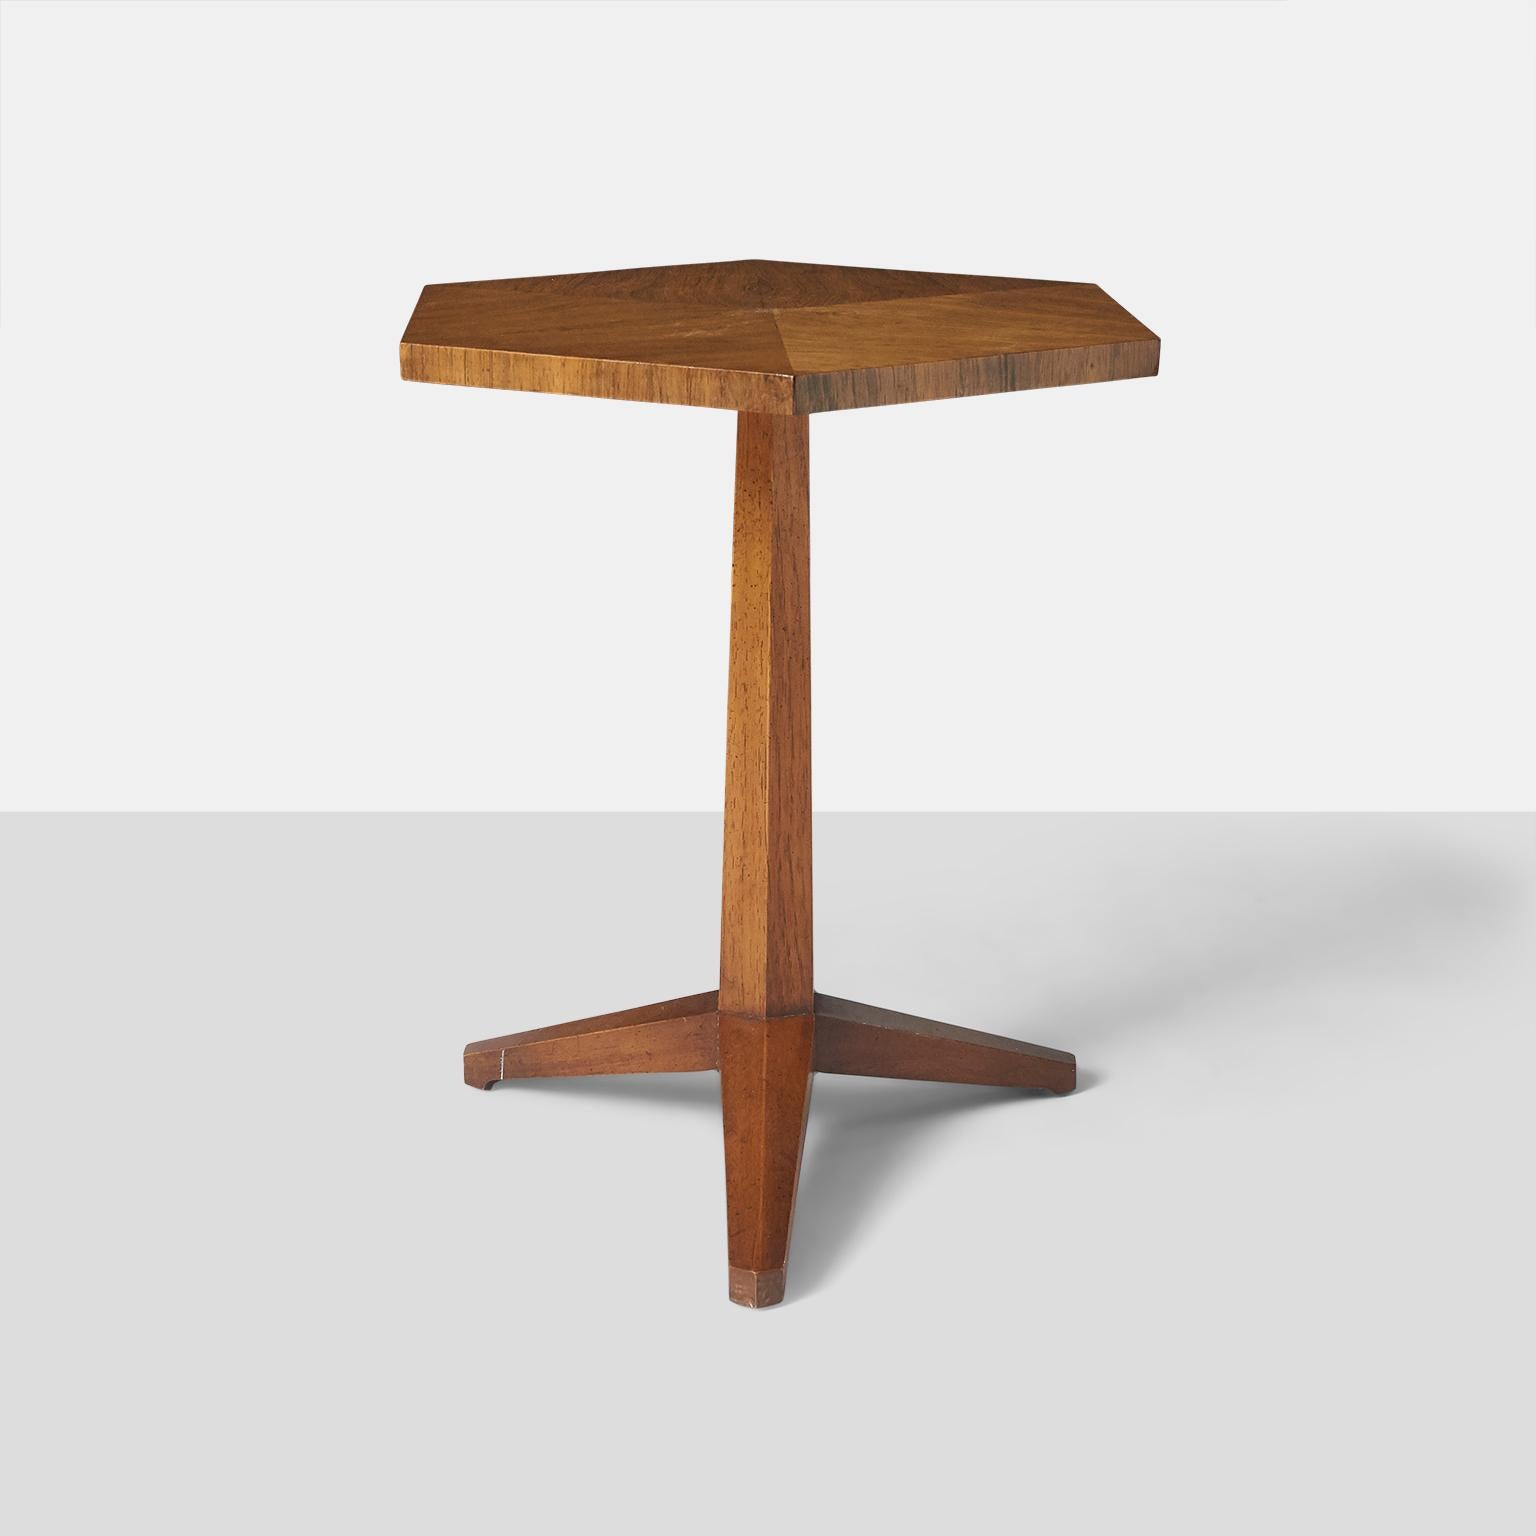 Heritage side table, hexagonal burled walnut top over a sculptural pedestal base, refinished, stamped 